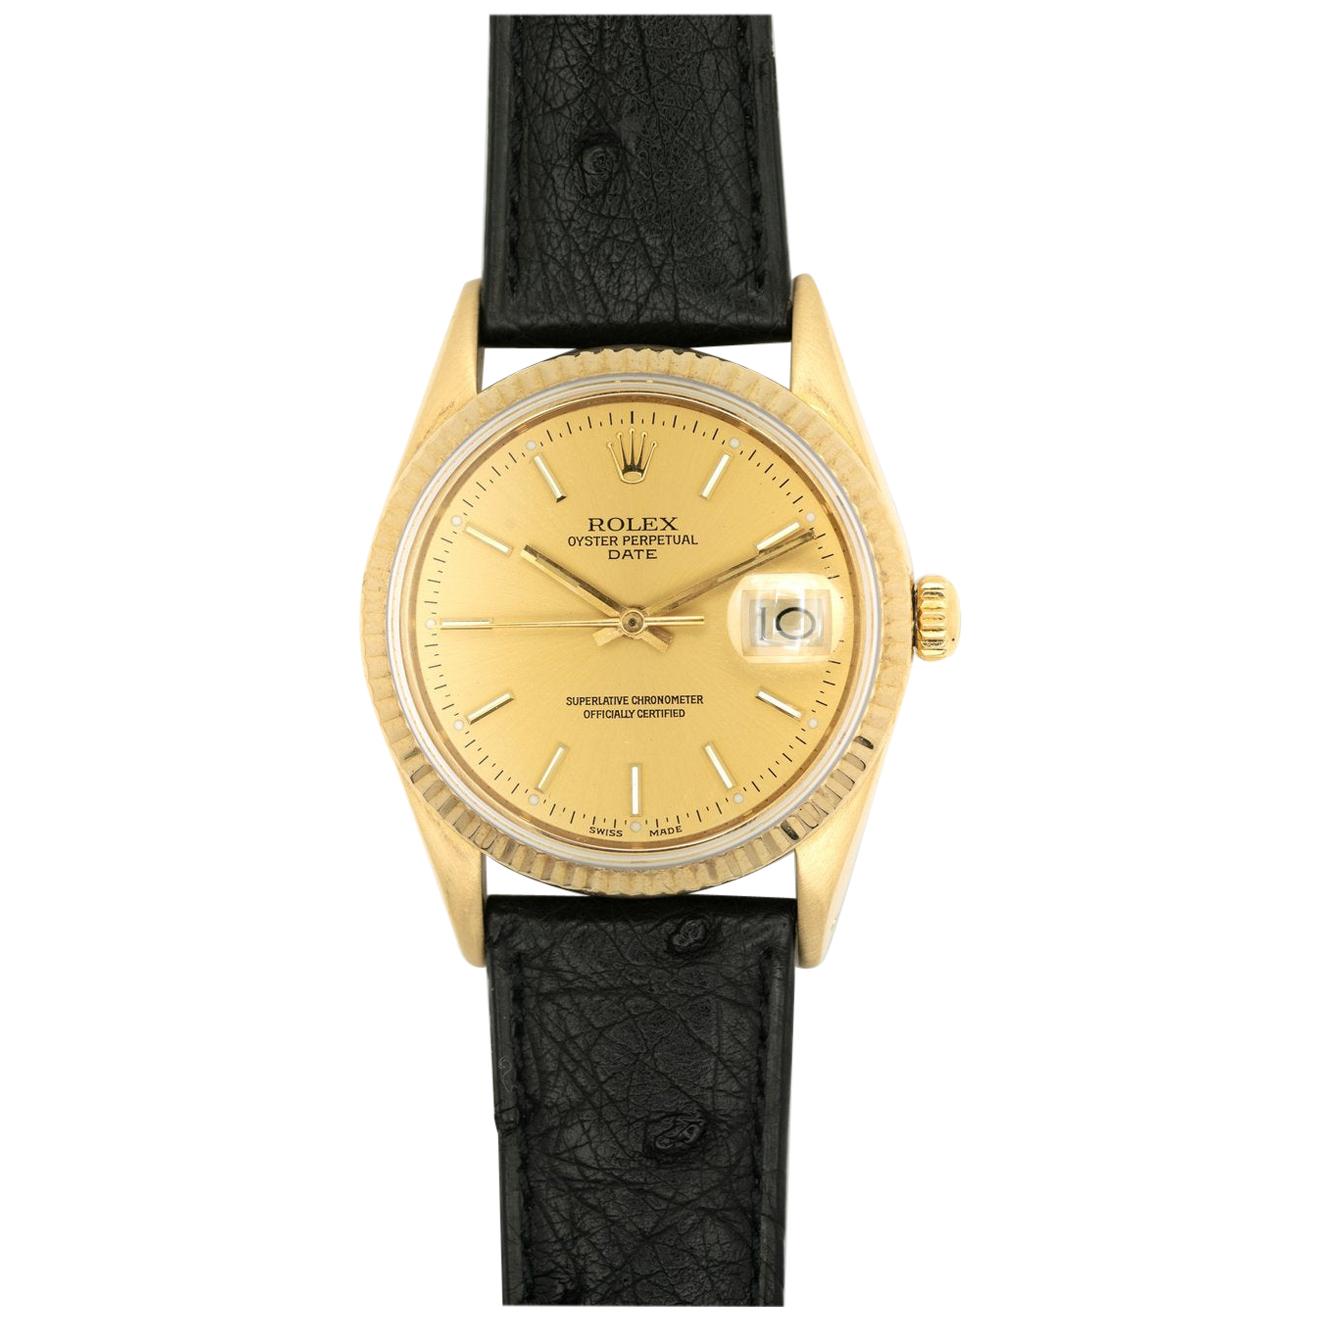 Rolex Oyster Perpetual Date Watch Model 15037